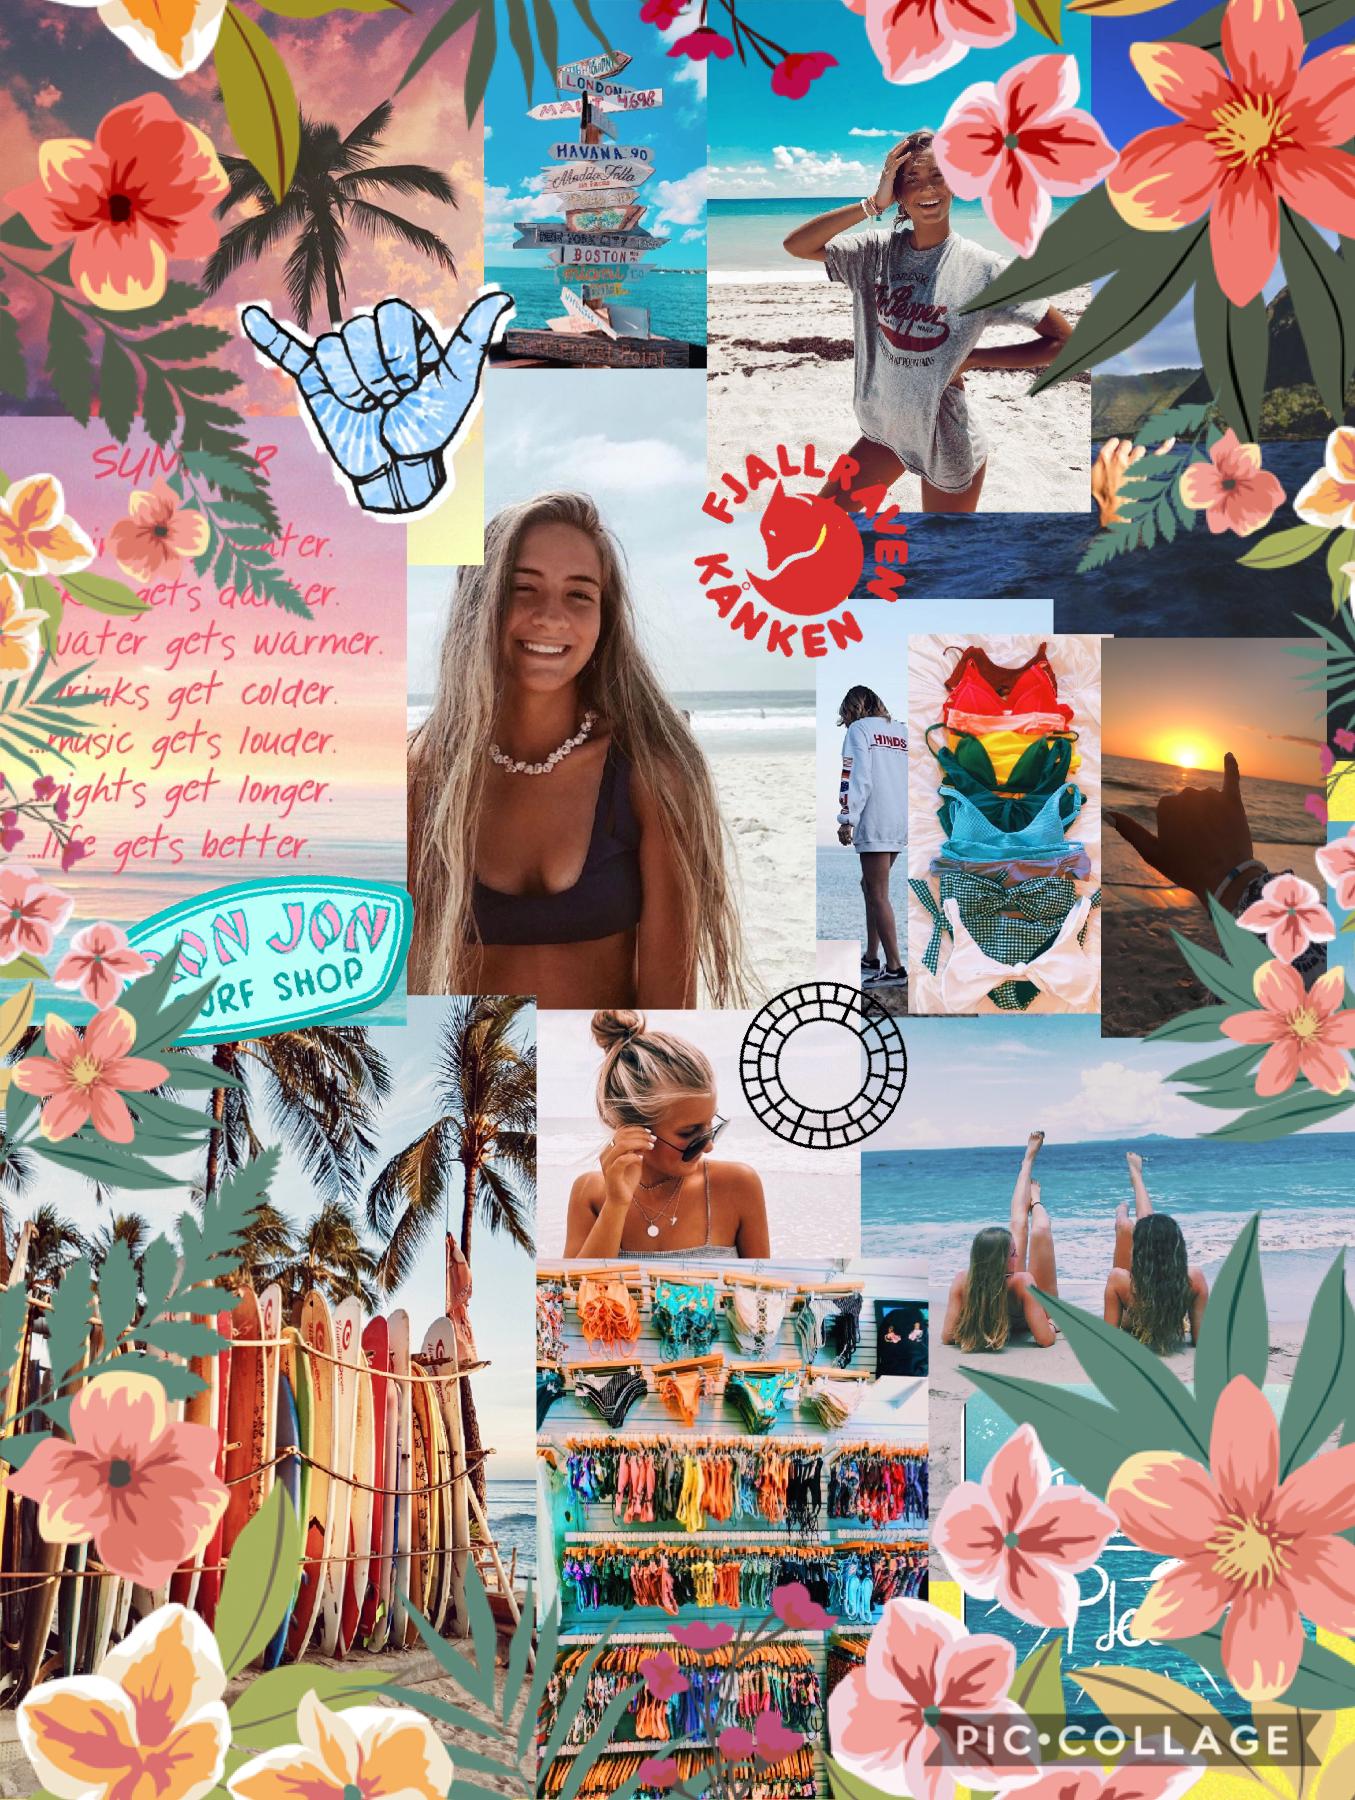 waiting for summer ☀️

#summer #beach #sun #tan #bikini #ronjon #vsco #flower #style #collage #piccollage #girl #pretty #surf #aesthetic #pretty